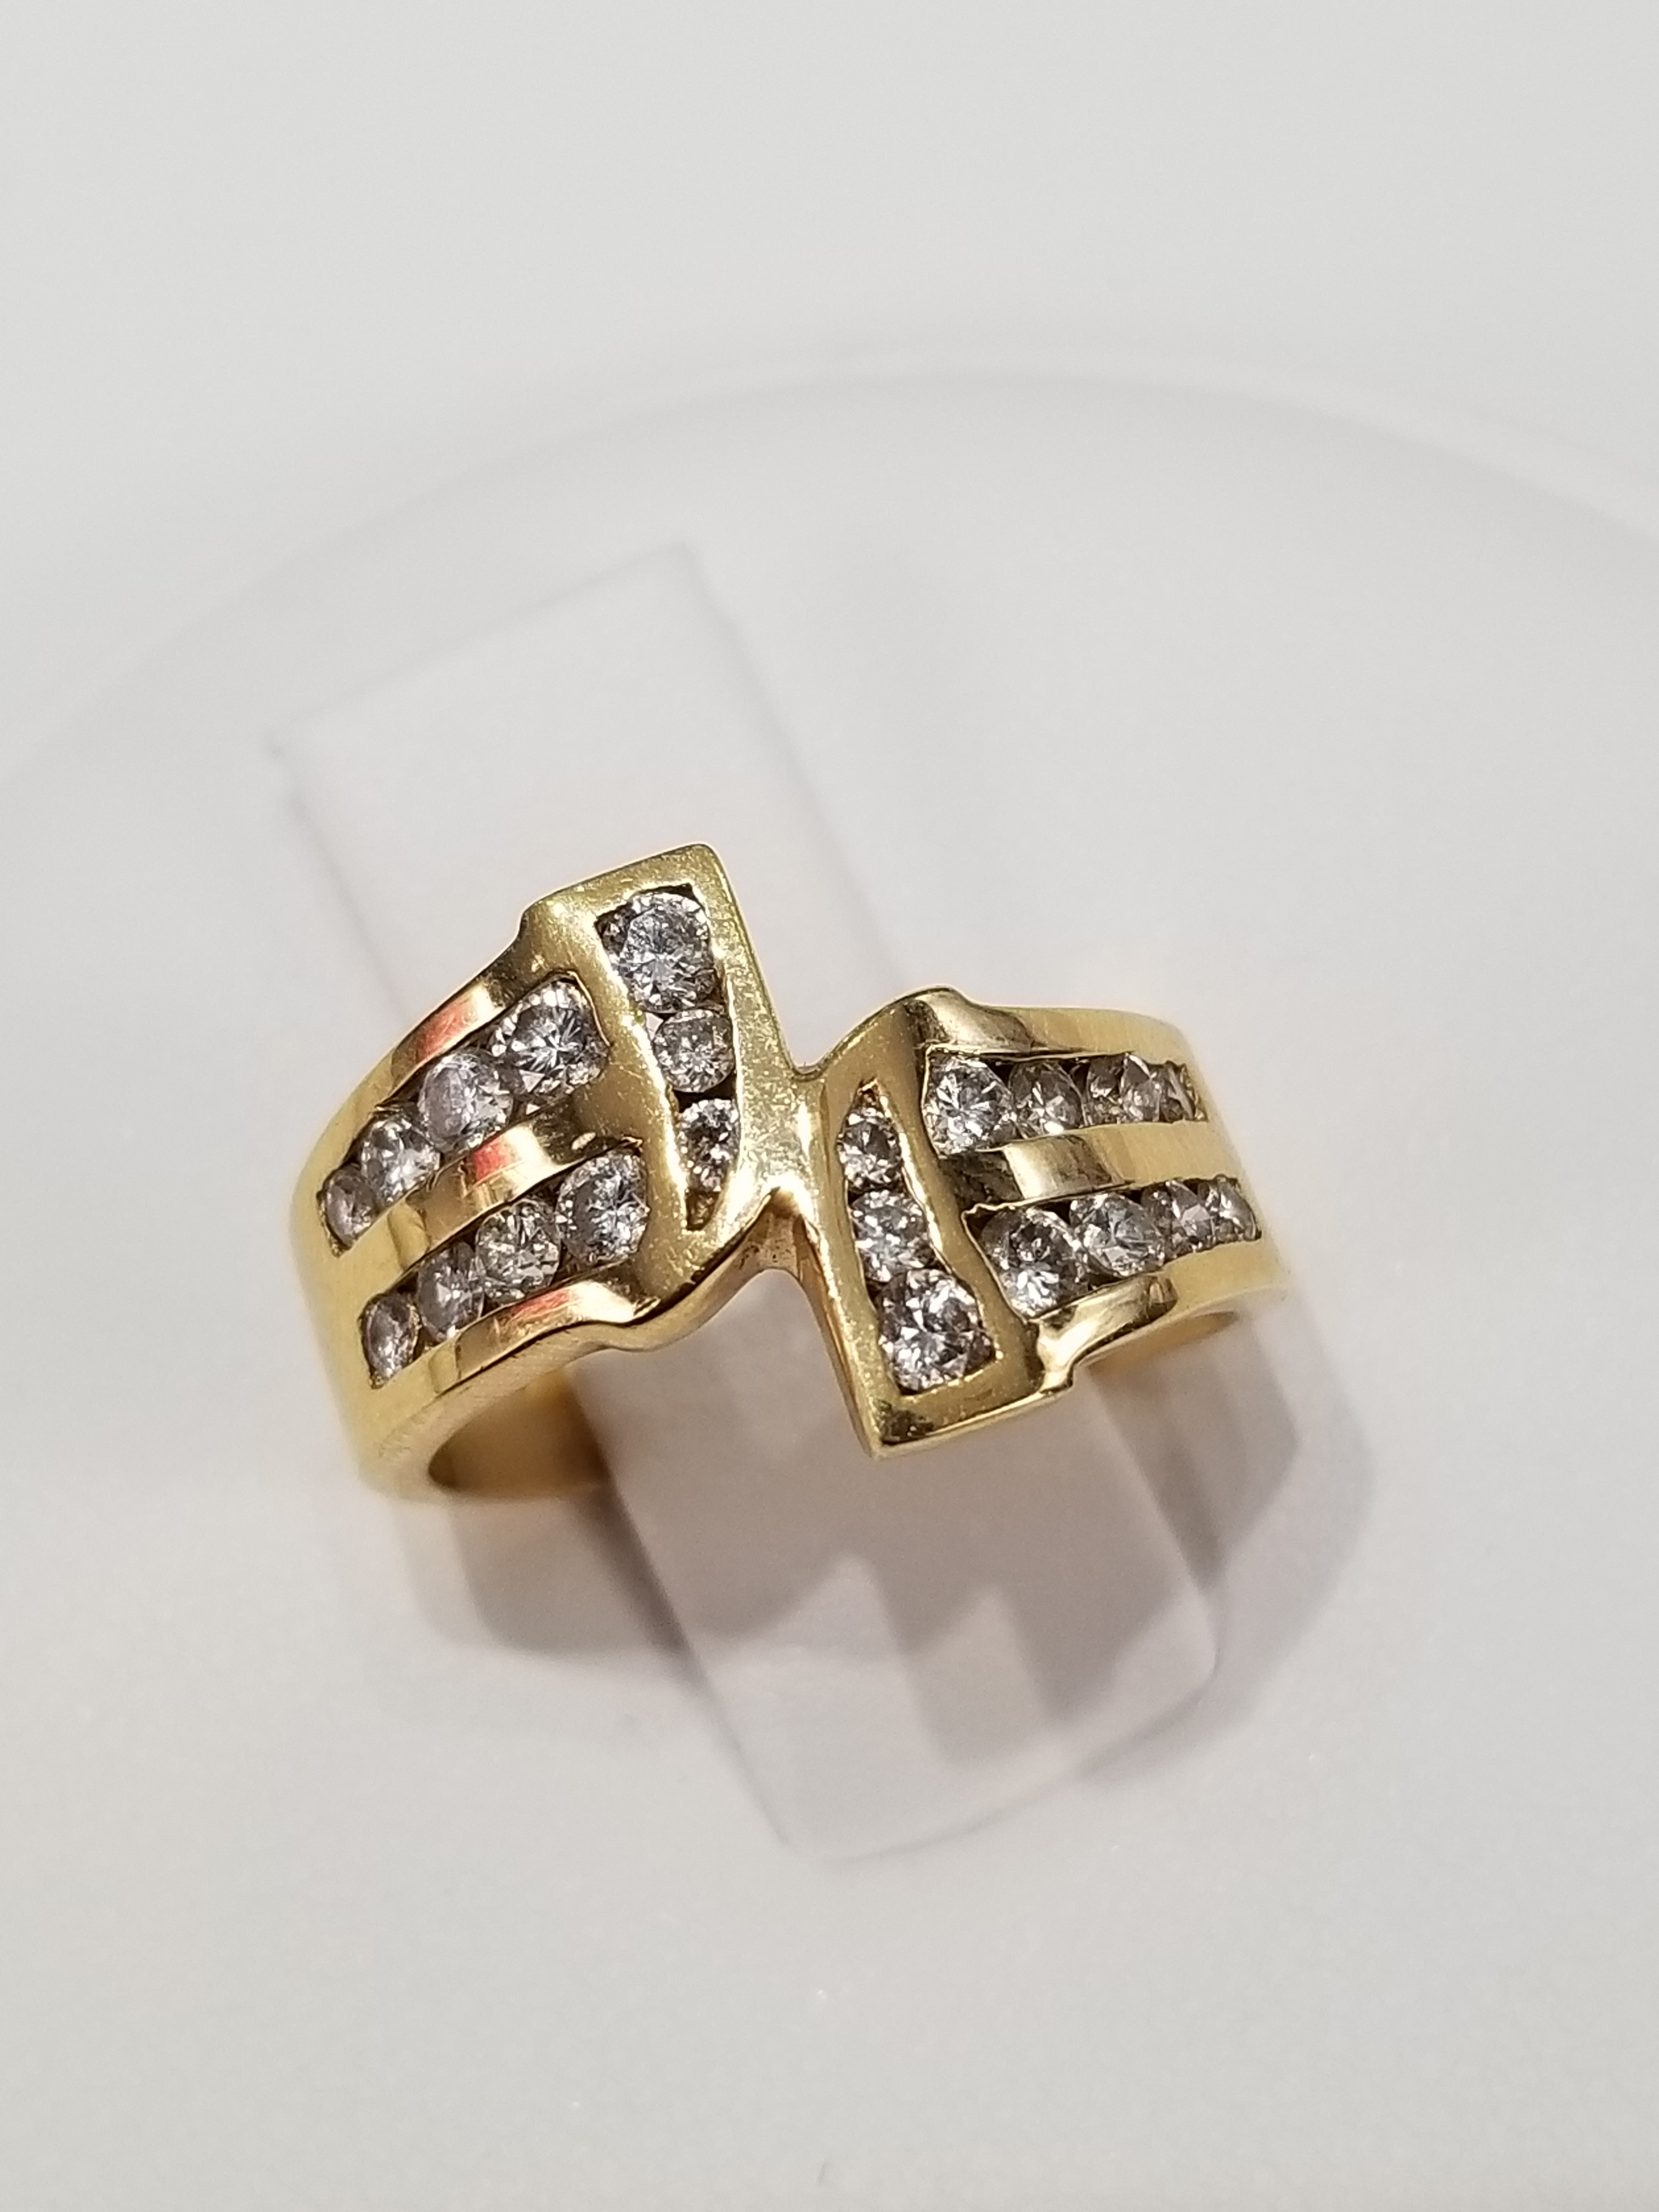 14K Yellow Gold
Diamonds: 1.10ct
Regular Price $4595
SALE $1325
Ref: RL756